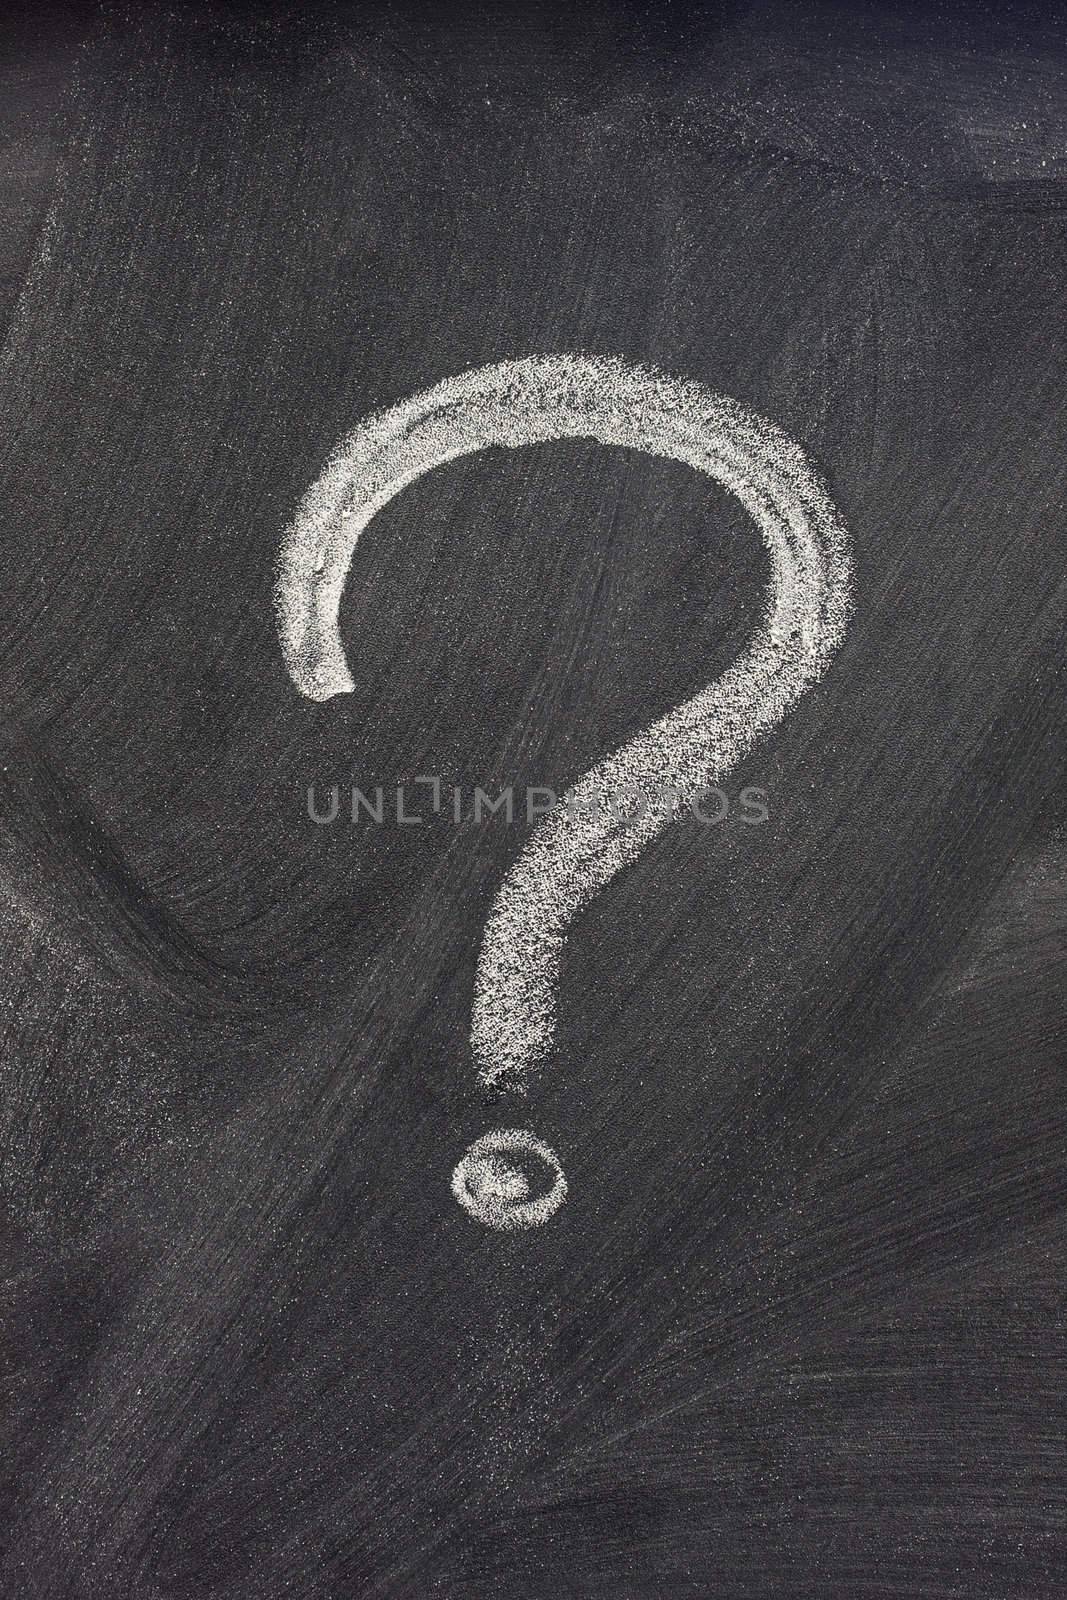 question mark handwritten with a white chalk on on a blackboard